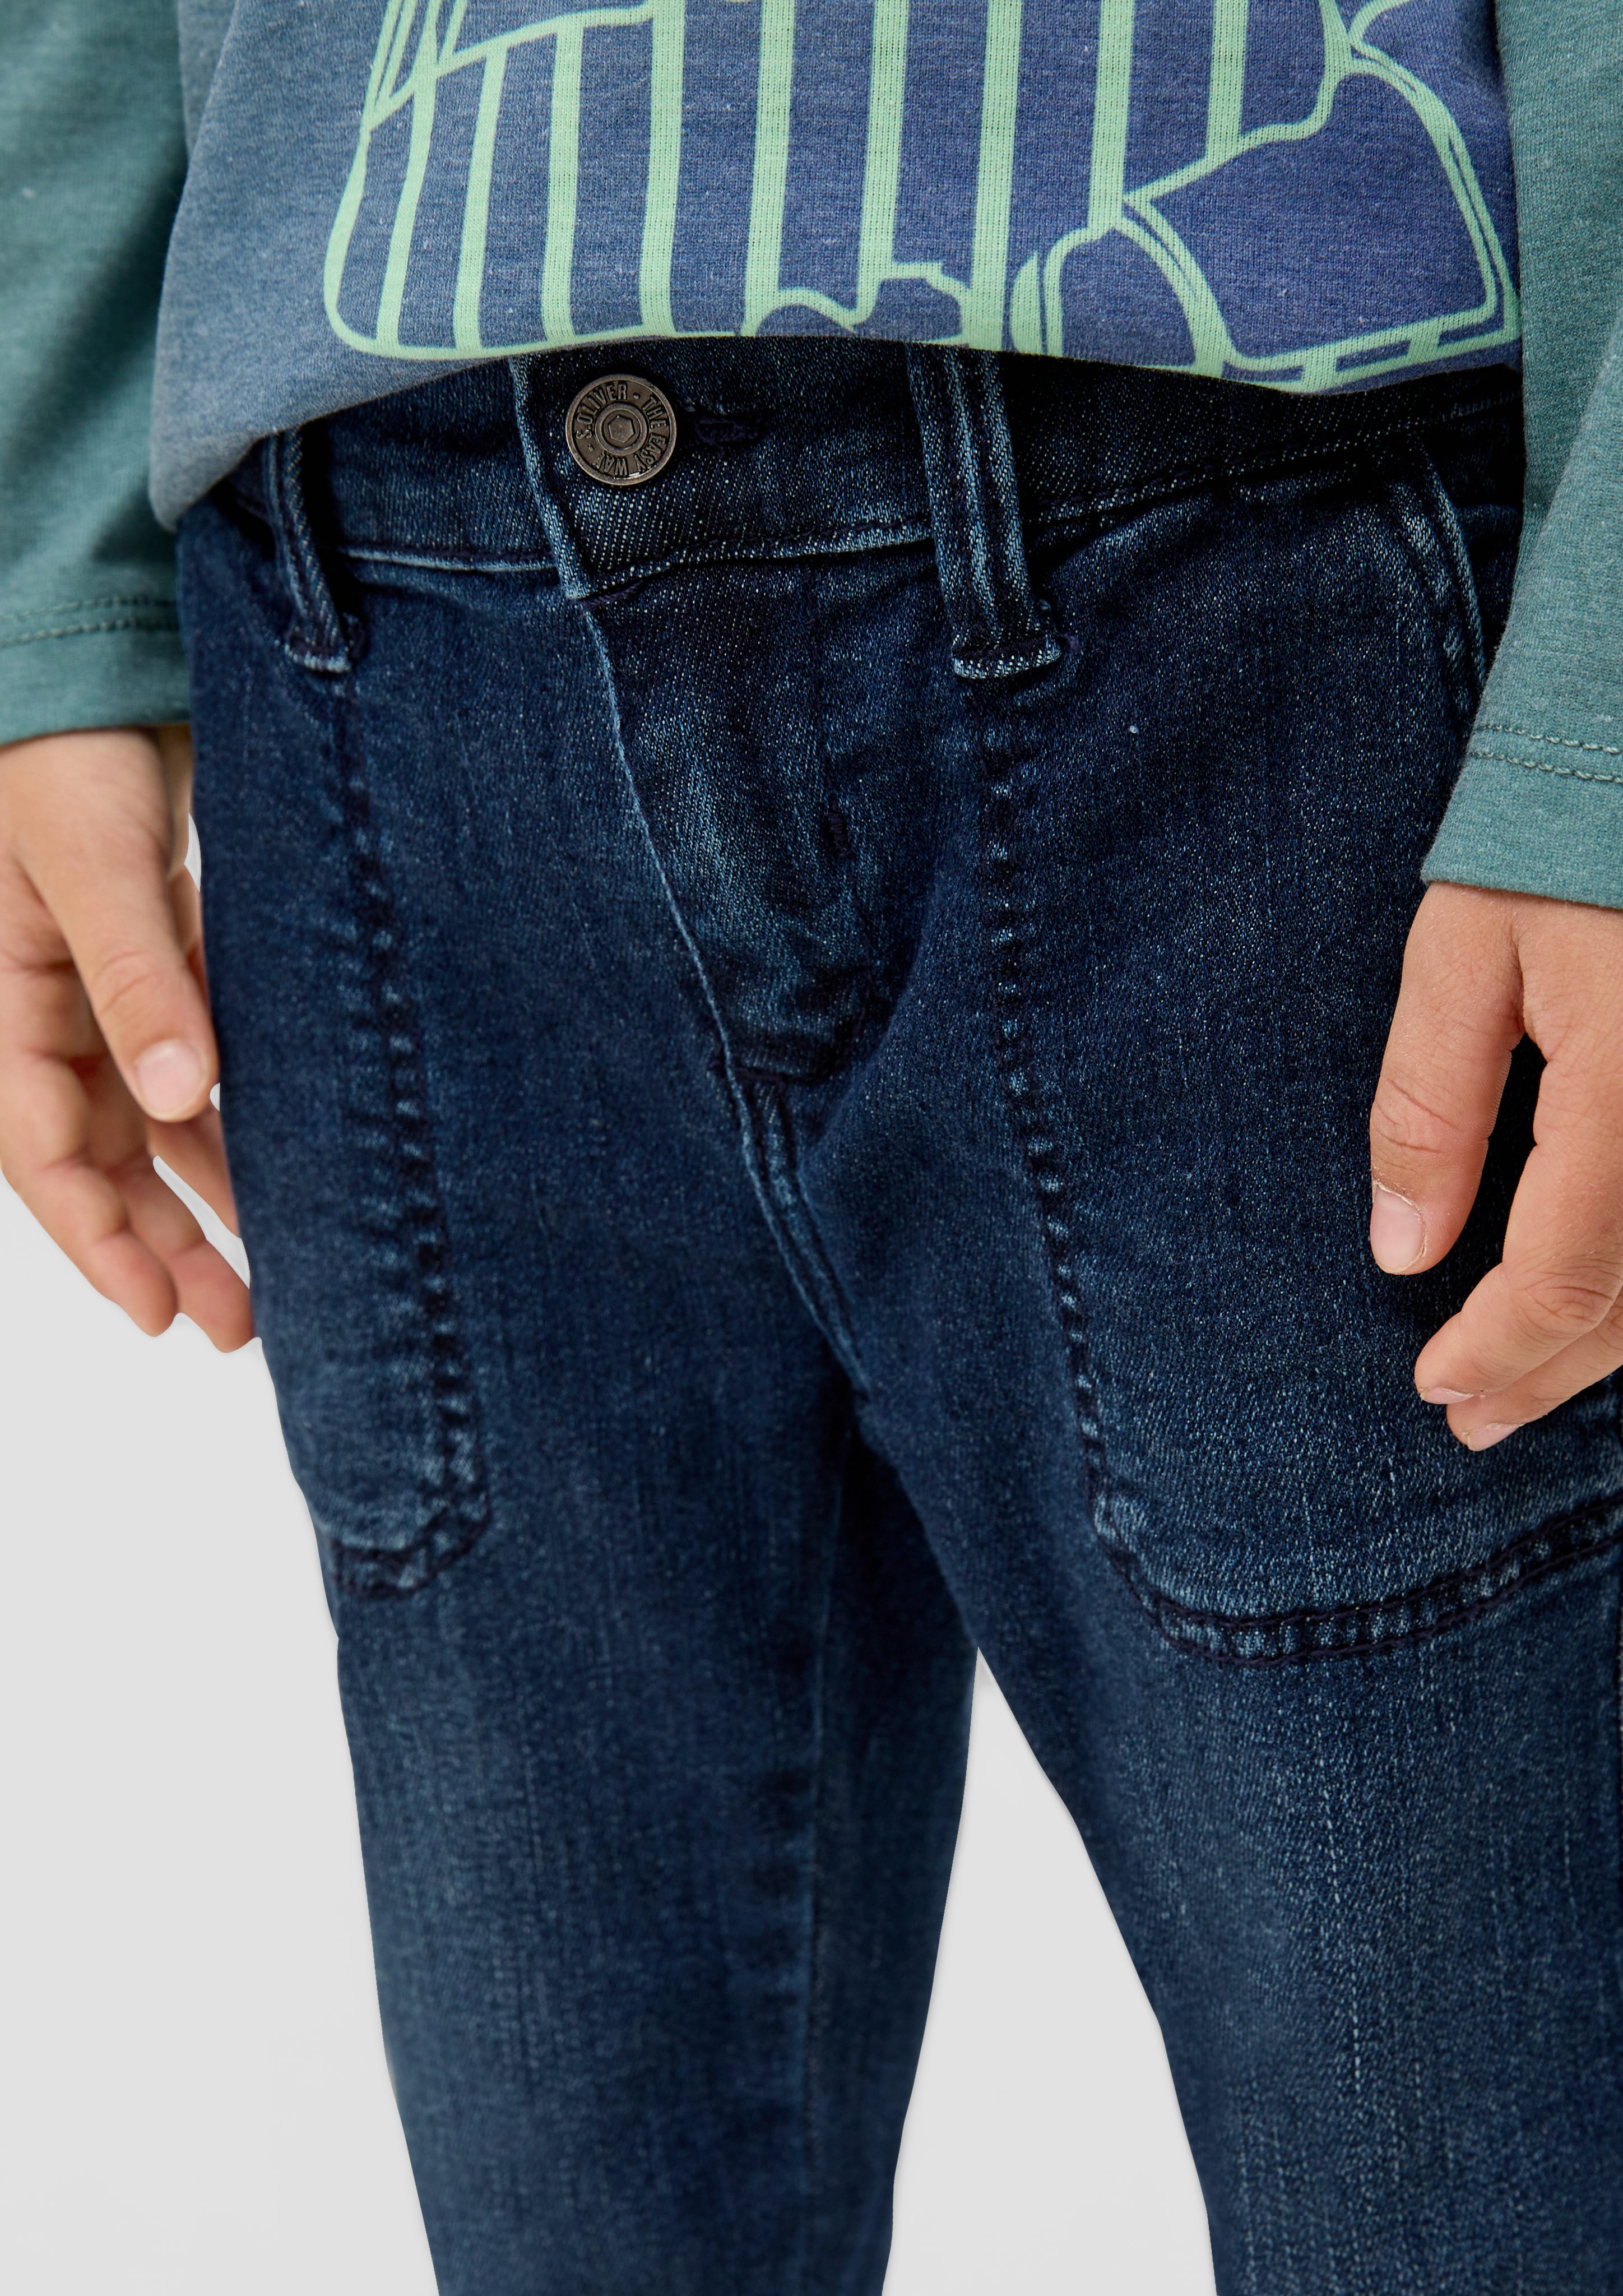 s.Oliver 5-Pocket-Jeans Pelle: verstellbarem Jeans Bund Waschung mit